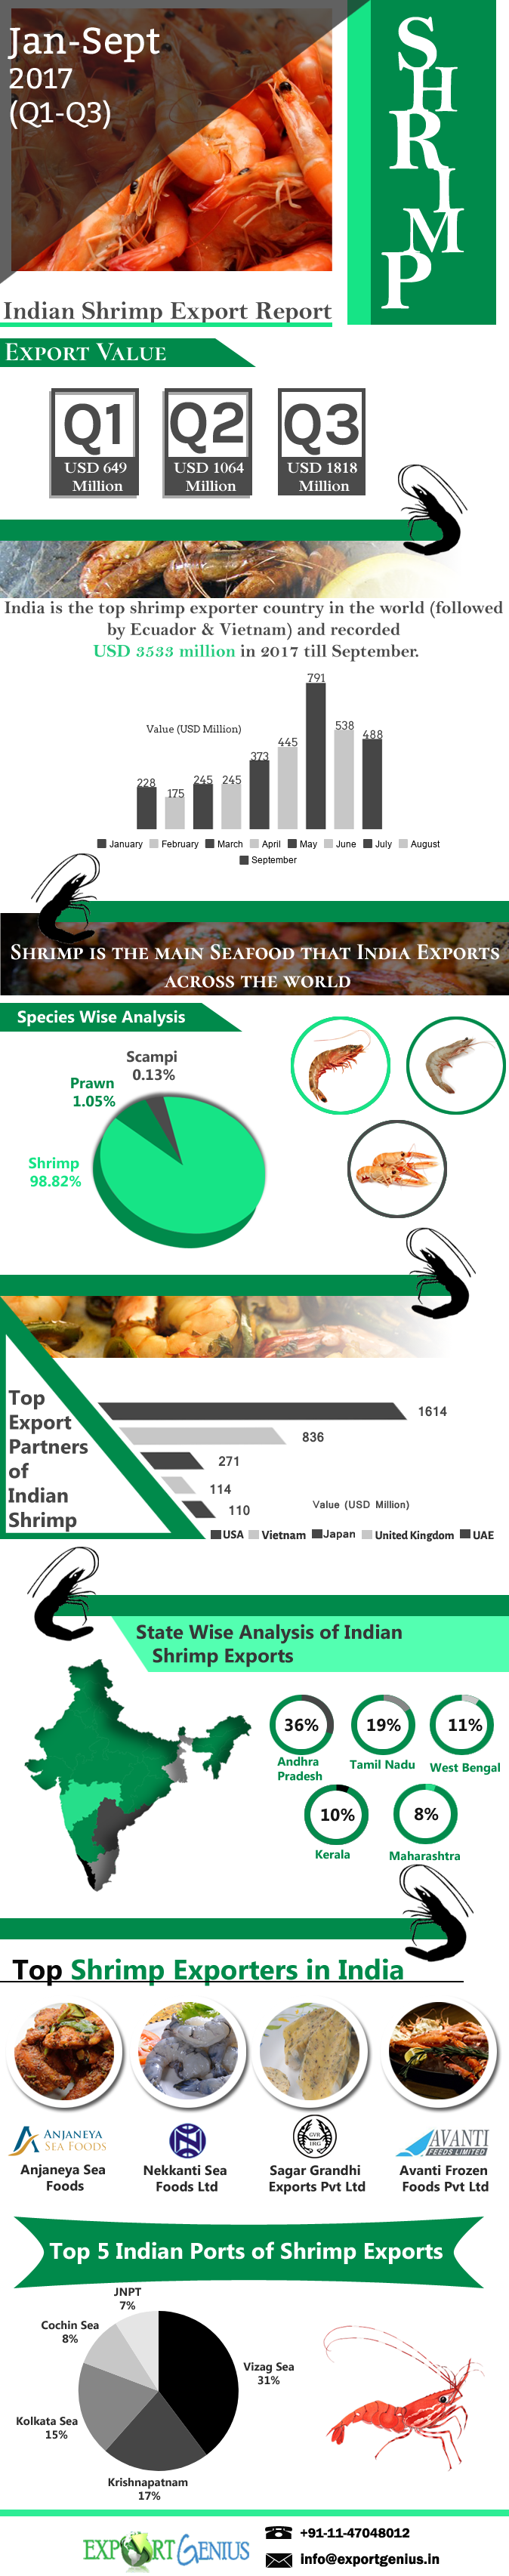 Indian Shrimp Exports